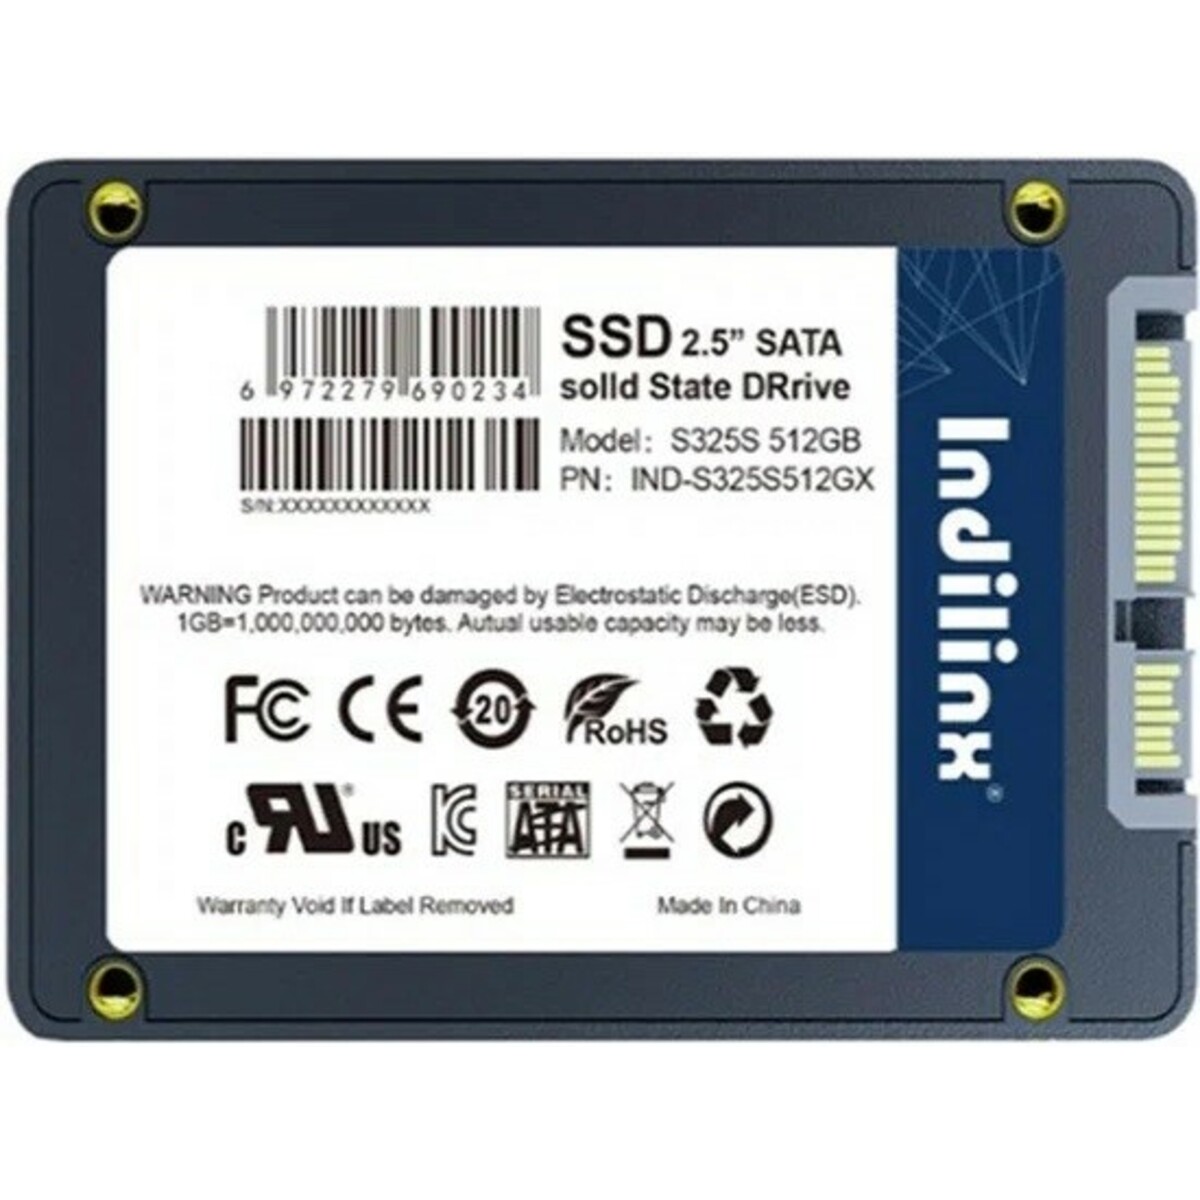 Накопитель SSD Indilinx SATA III 512GB IND-S325S512GX 